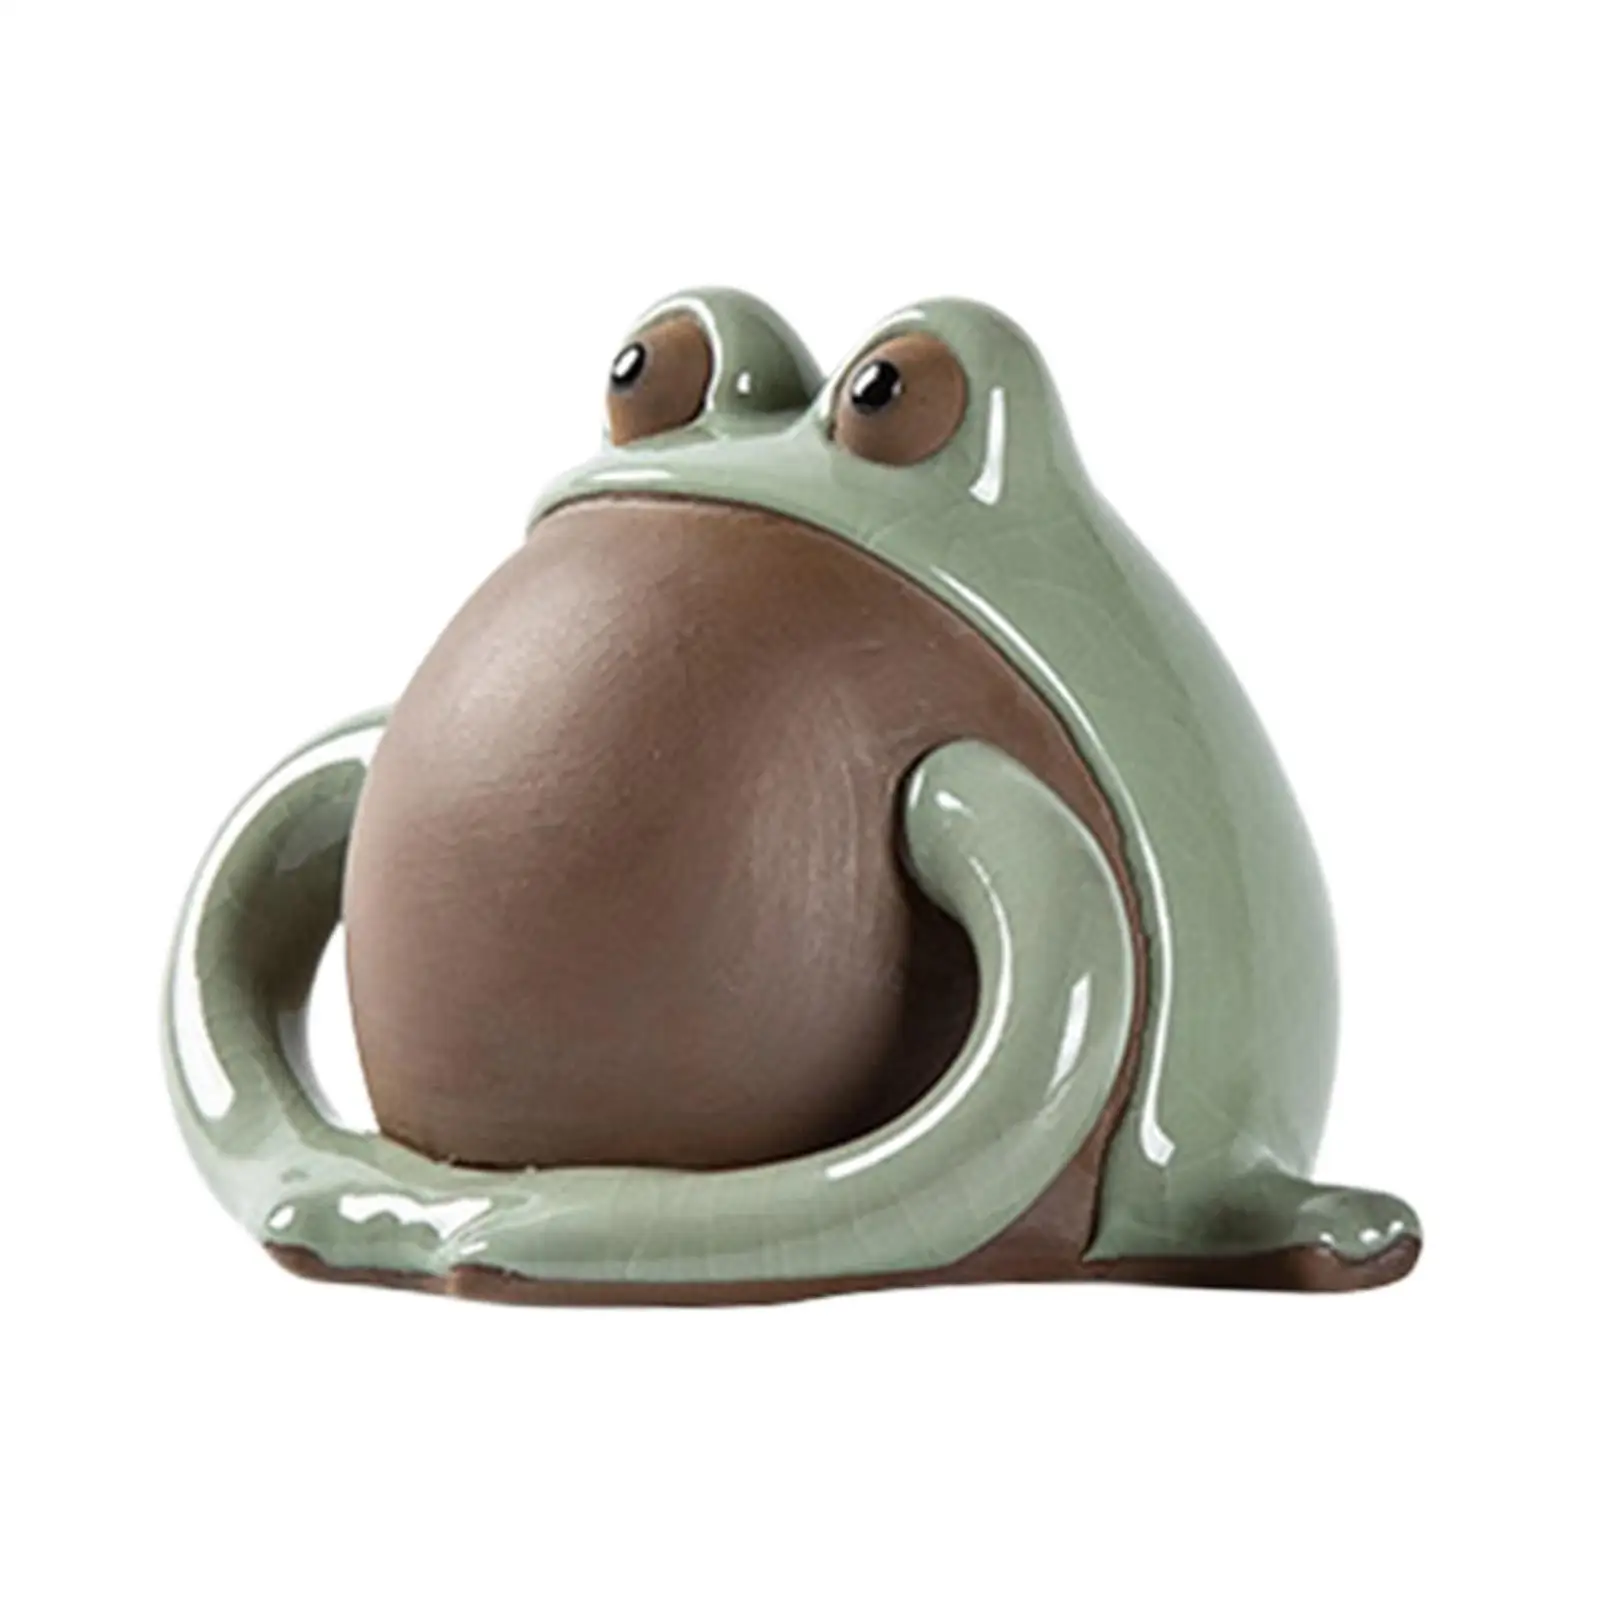 Tea Pet for Kungfu Tea Figurine Collection Ornament Frog Statue Sculpture for Tea Room Living Room Bedroom Table Centerpiece